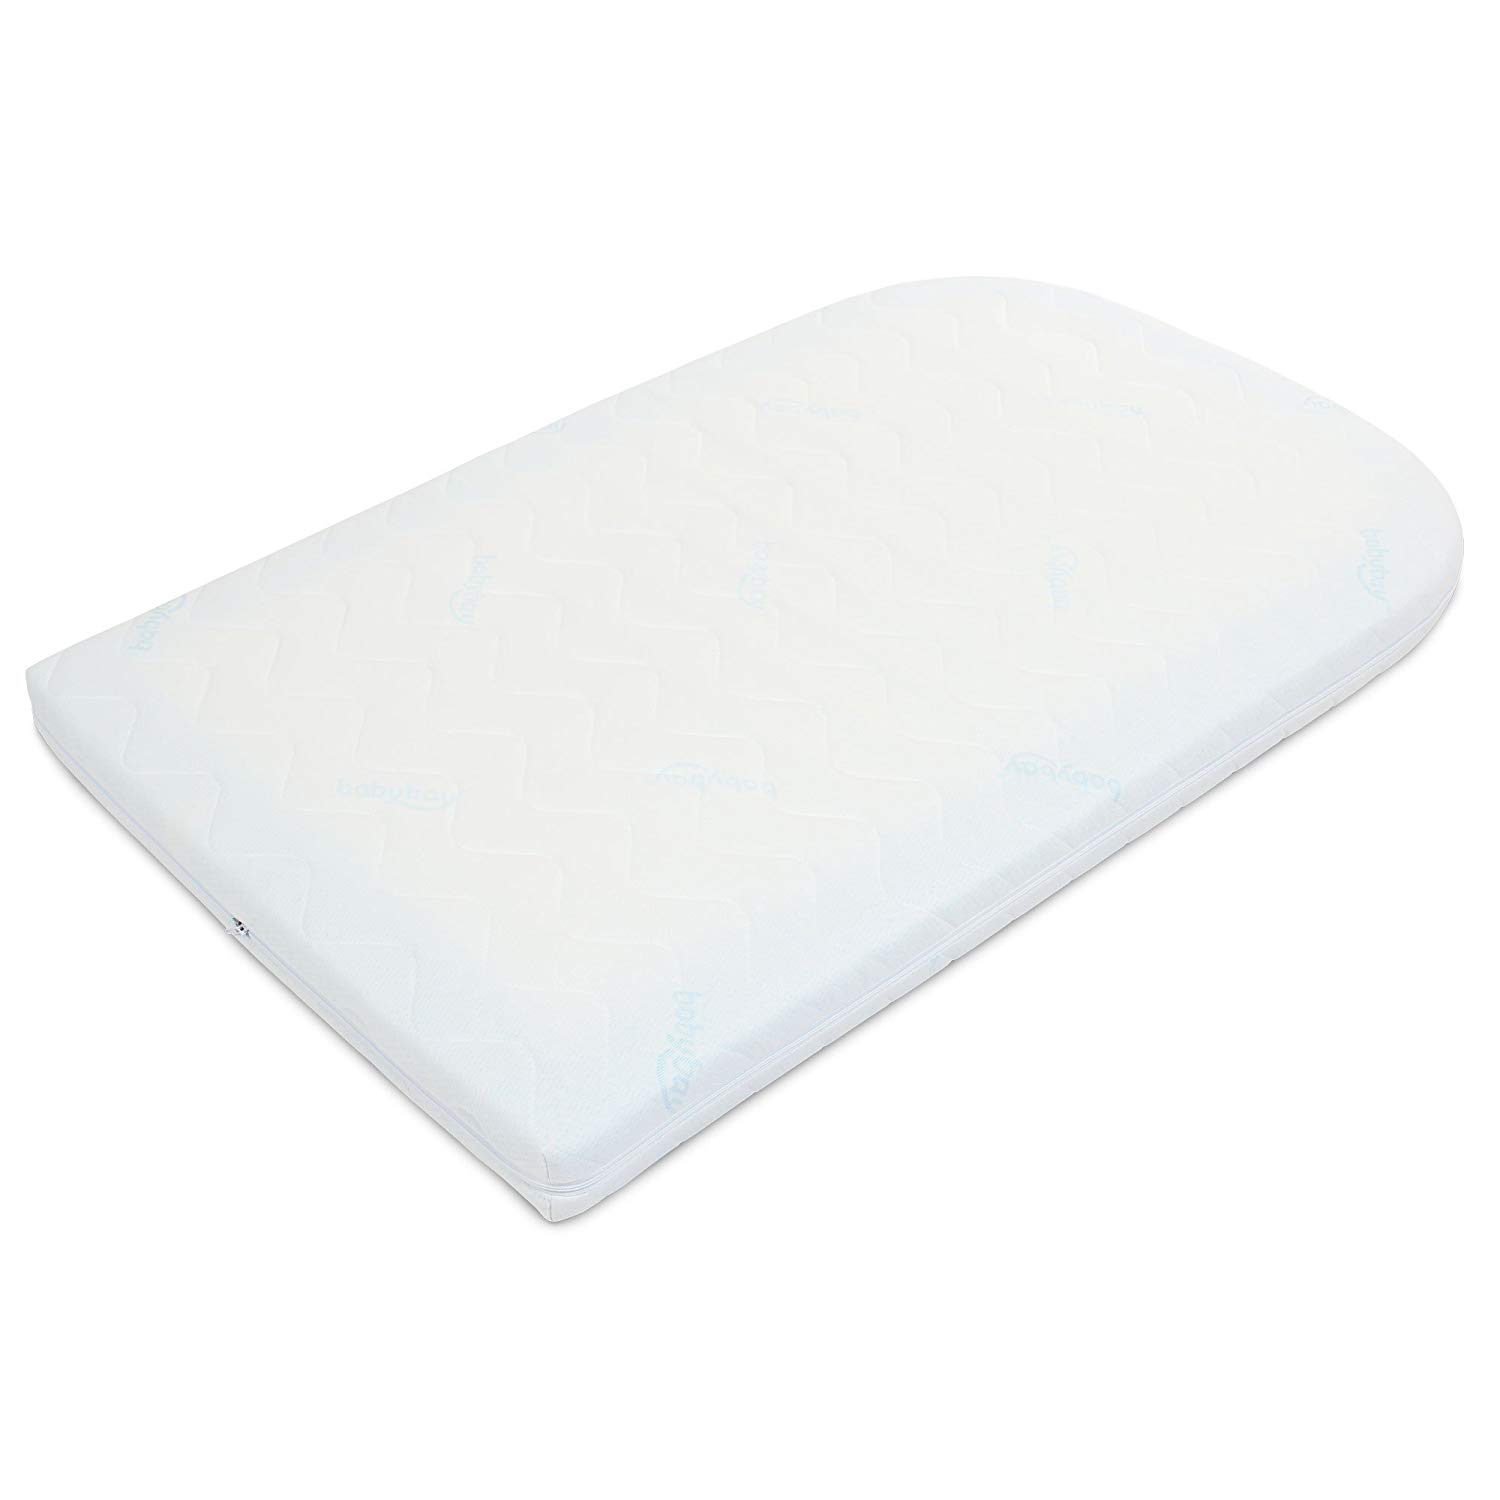 babybay Maxi Cot Bed Conversion Kit White White